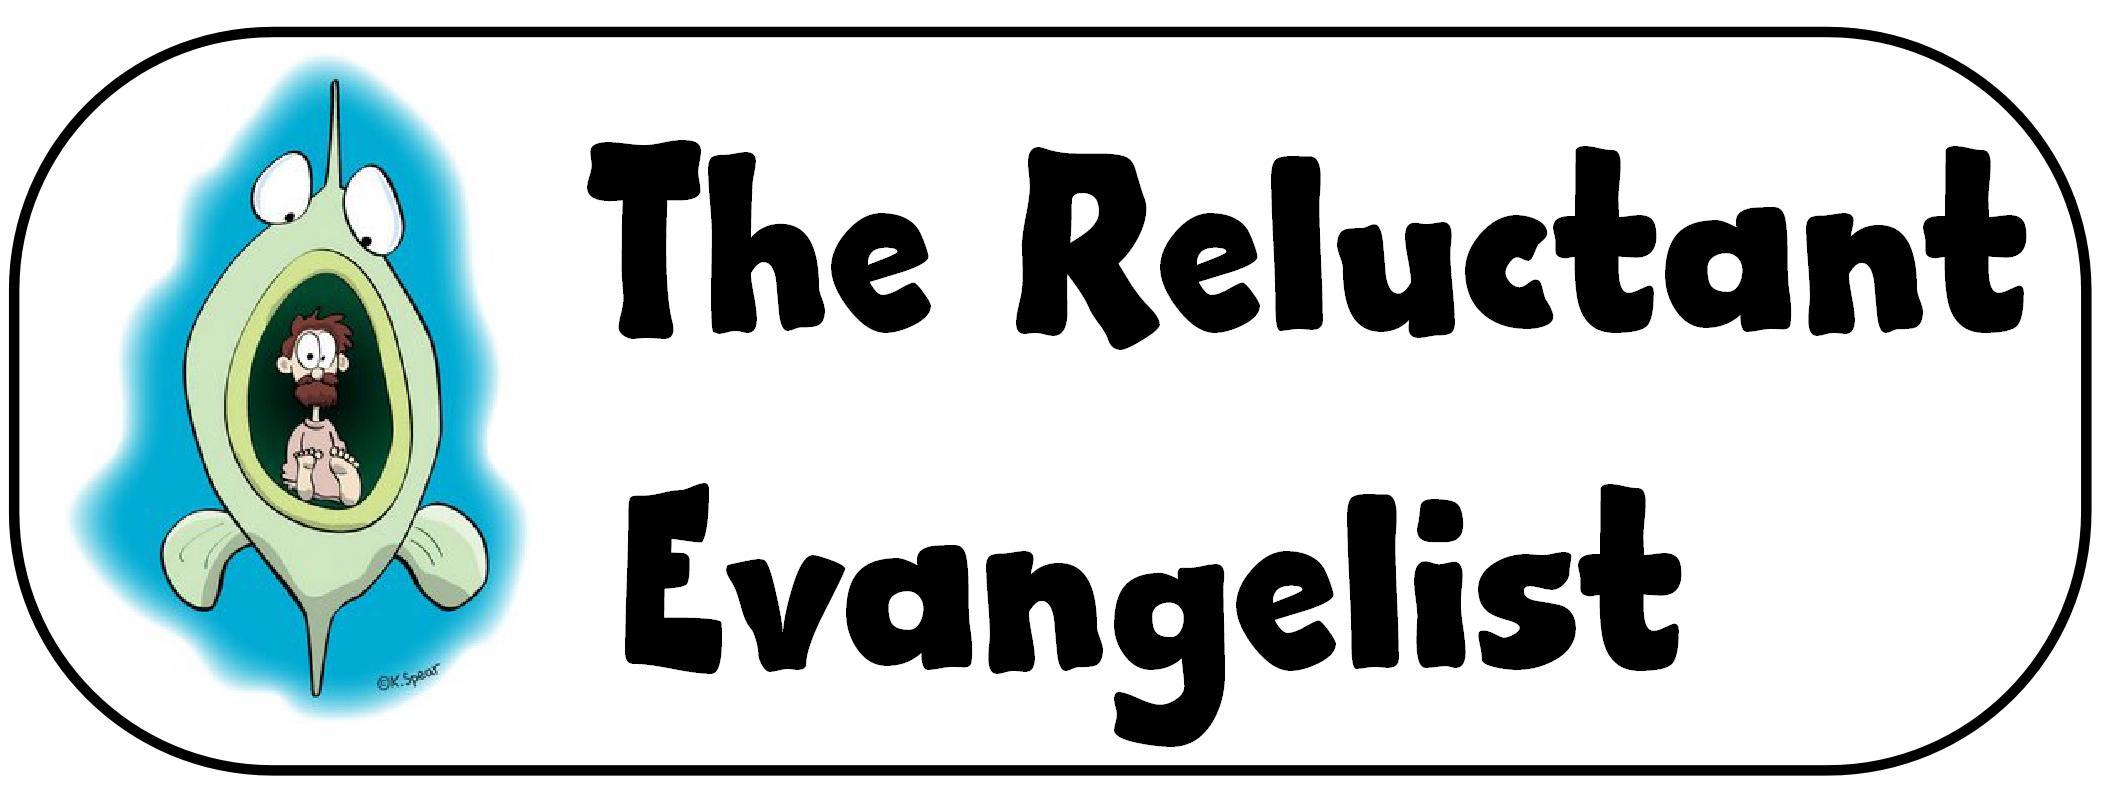 reluctant evangelist